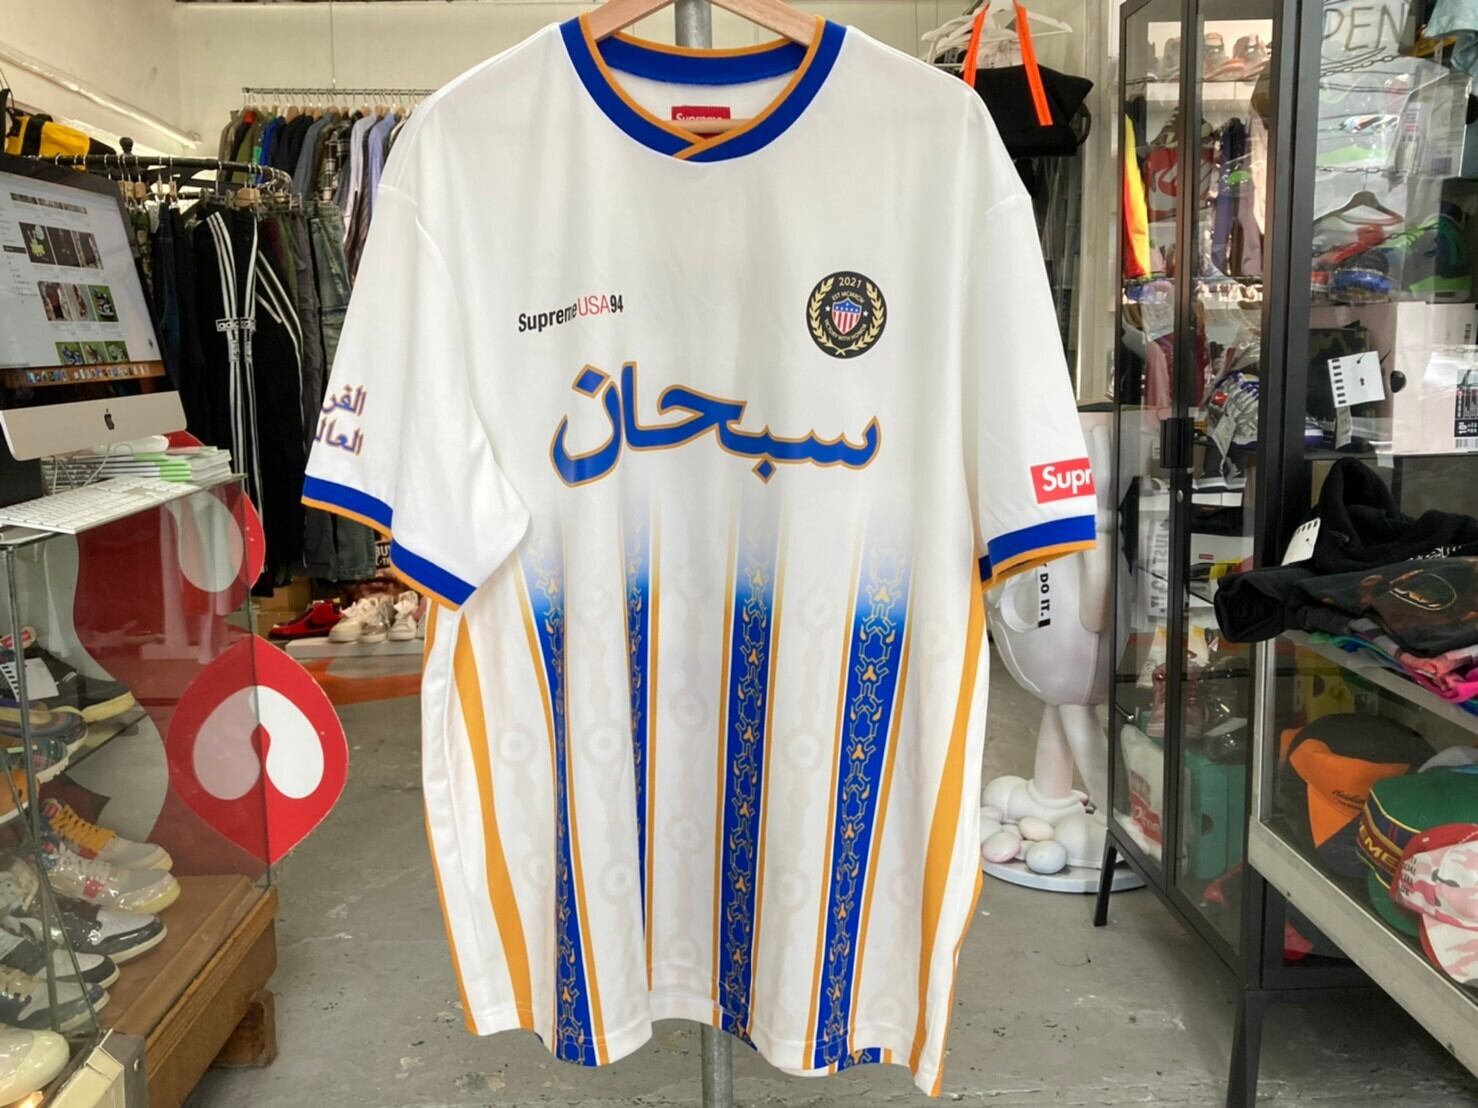 supreme arabic logo soccer jersey 美品 XL